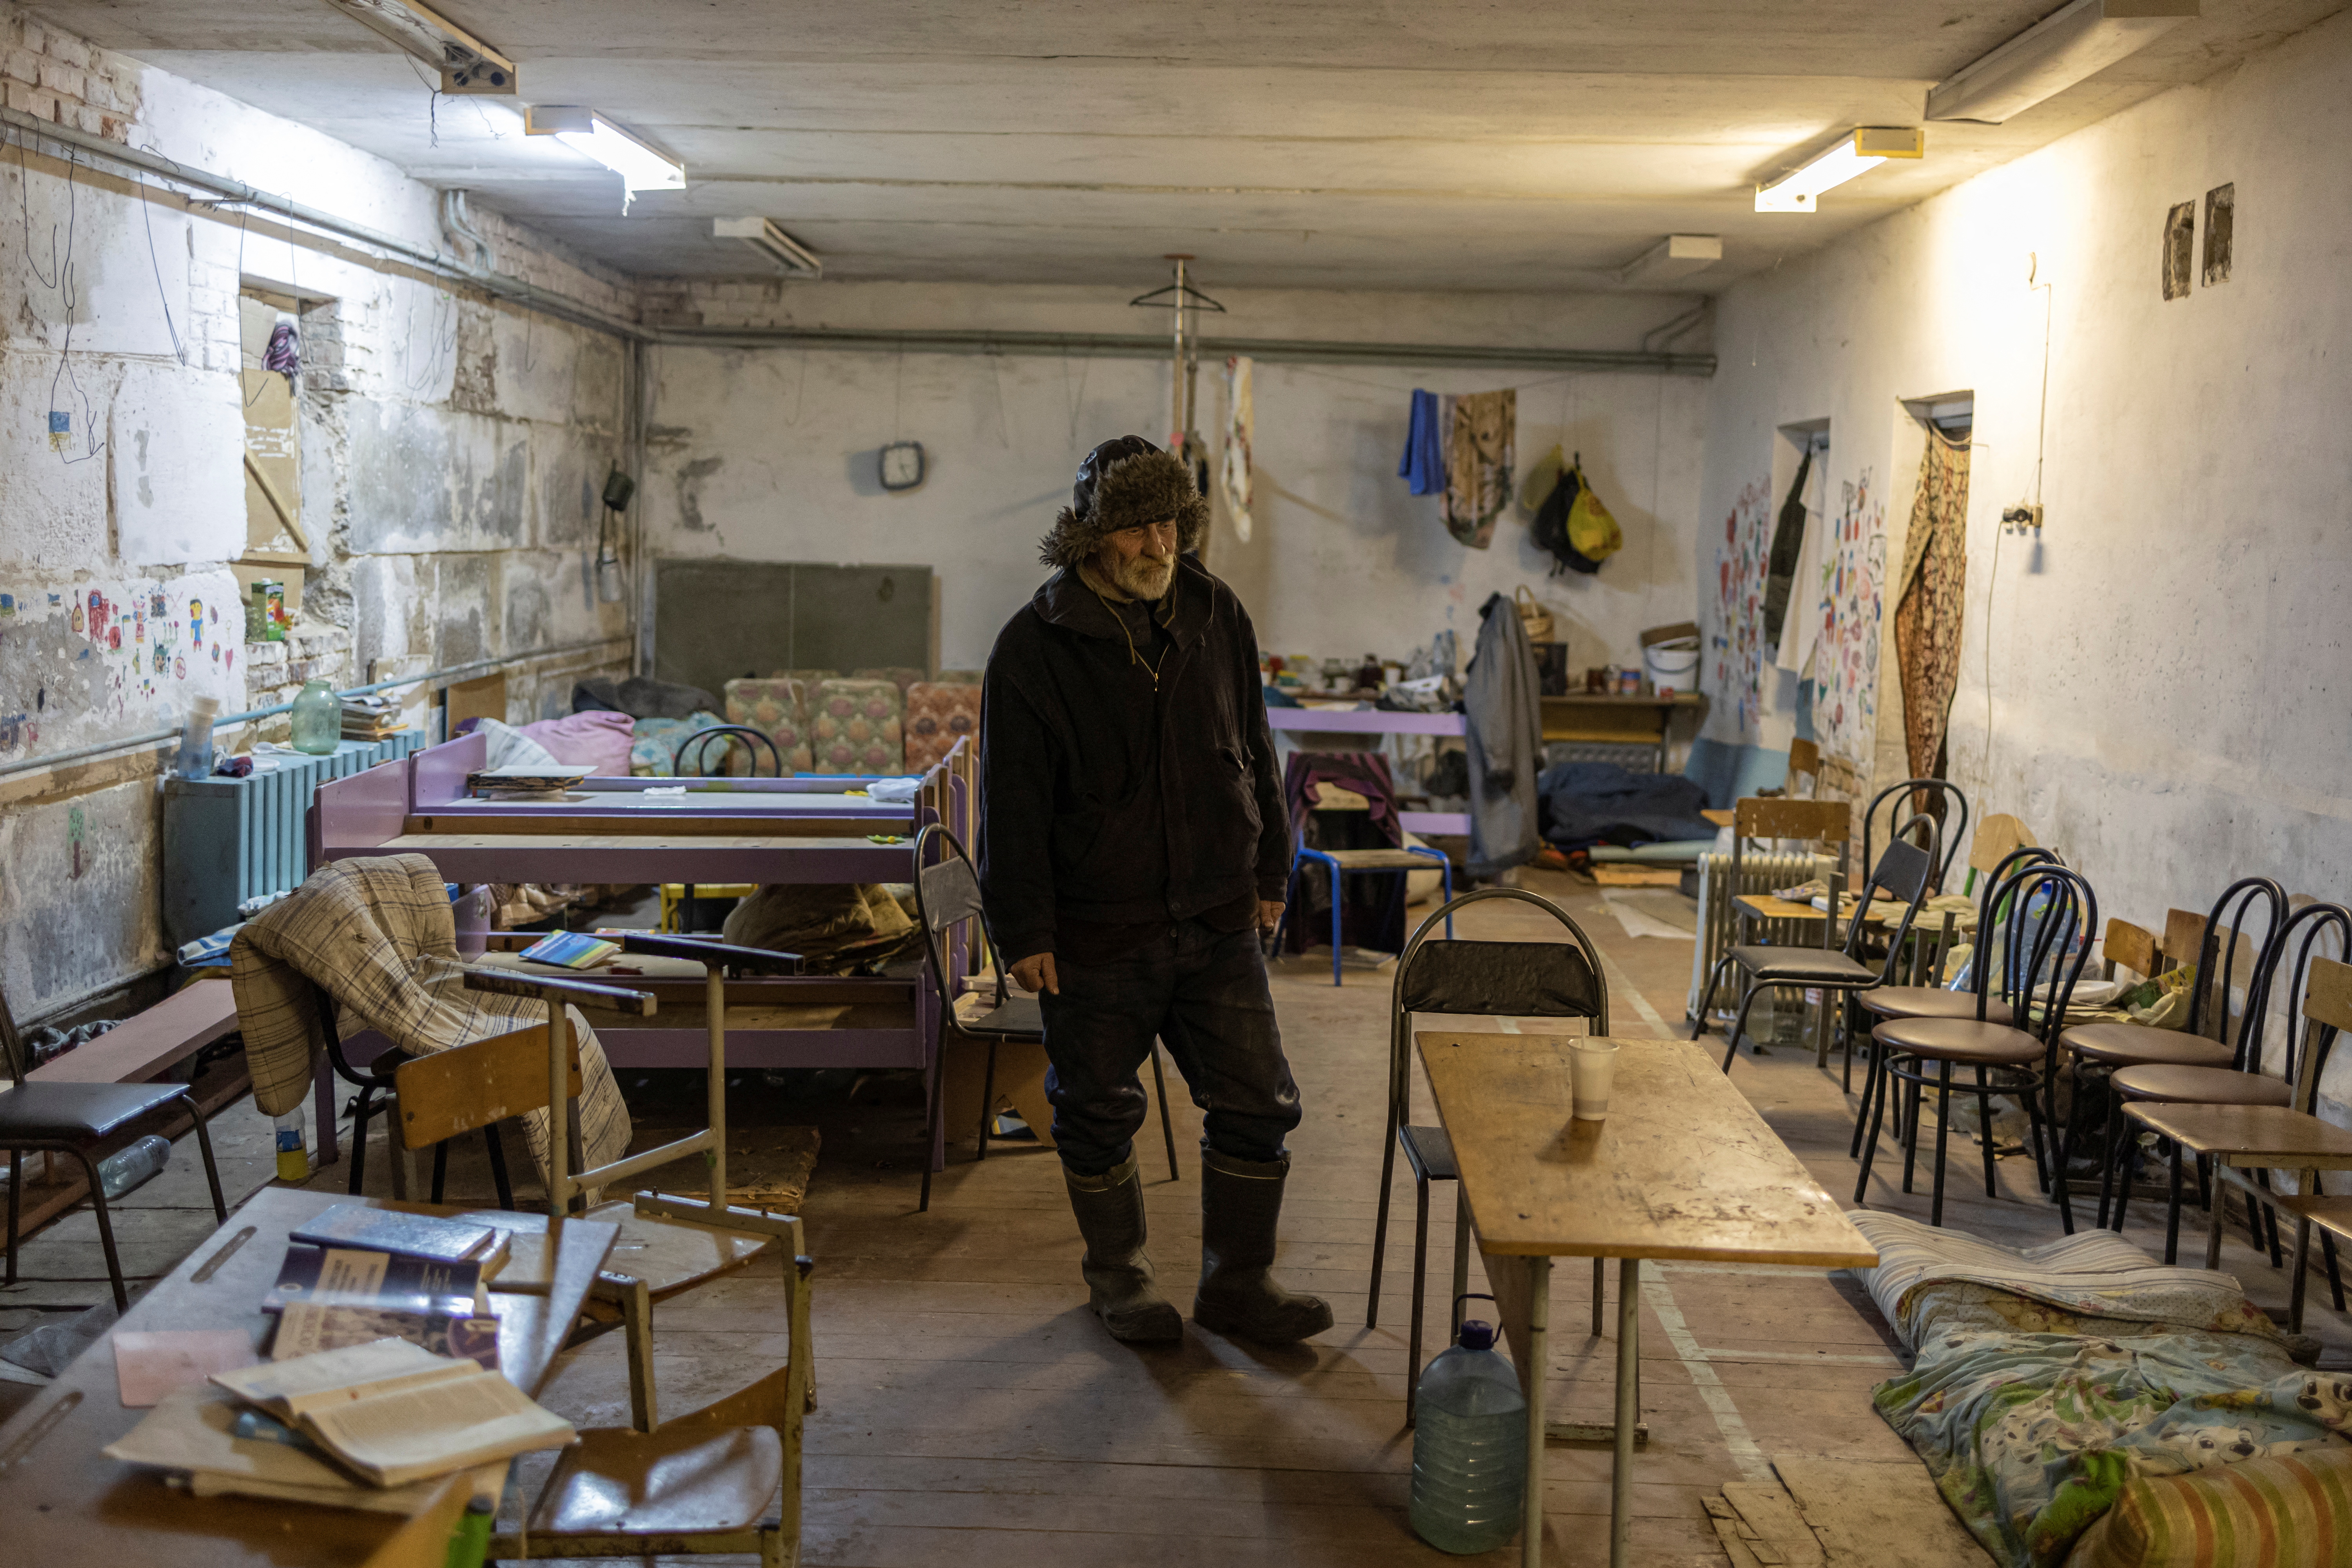 The Wider Image: Ukrainian villagers count dead after weeks confined in school basement